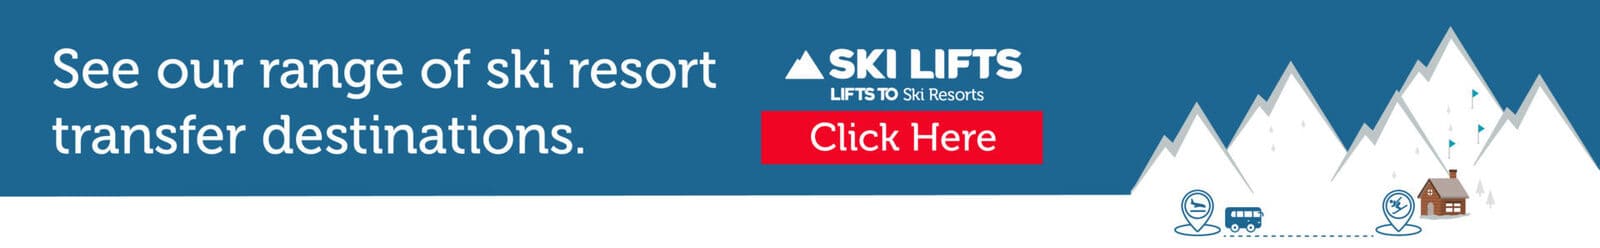 ski lifts book banner